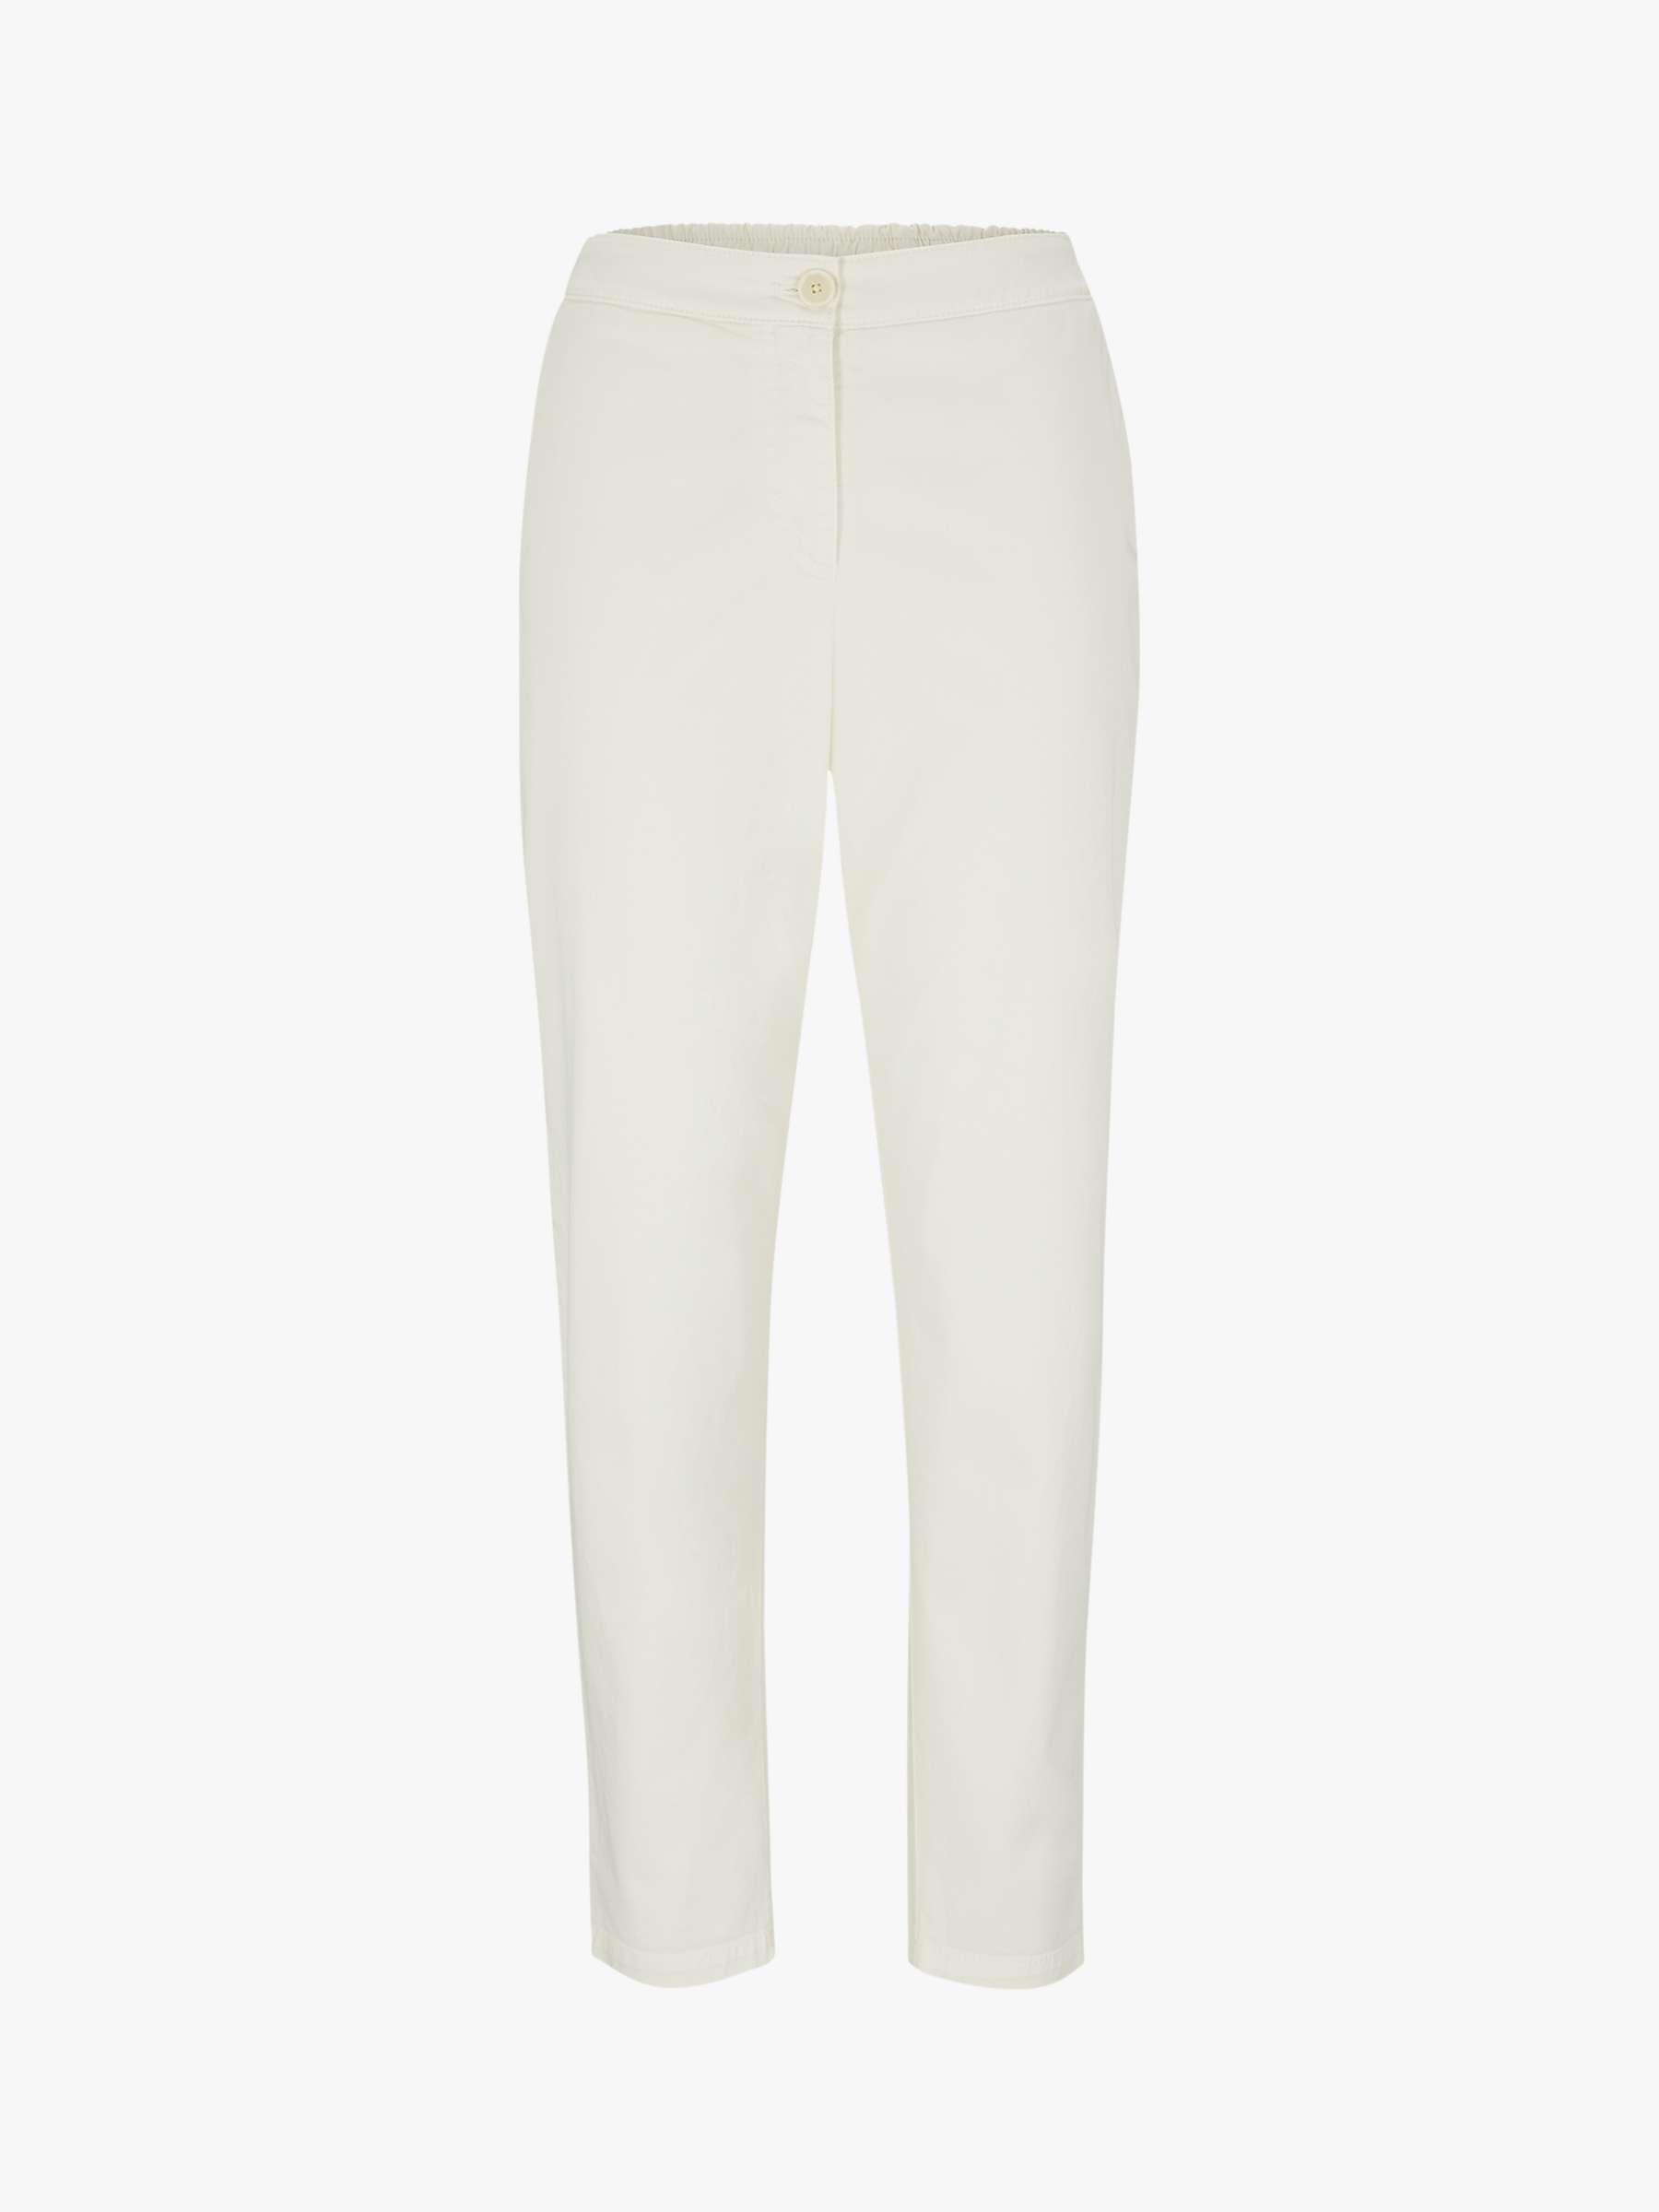 Buy HUGO BOSS Tolinda Tailored Trousers, Open White Online at johnlewis.com